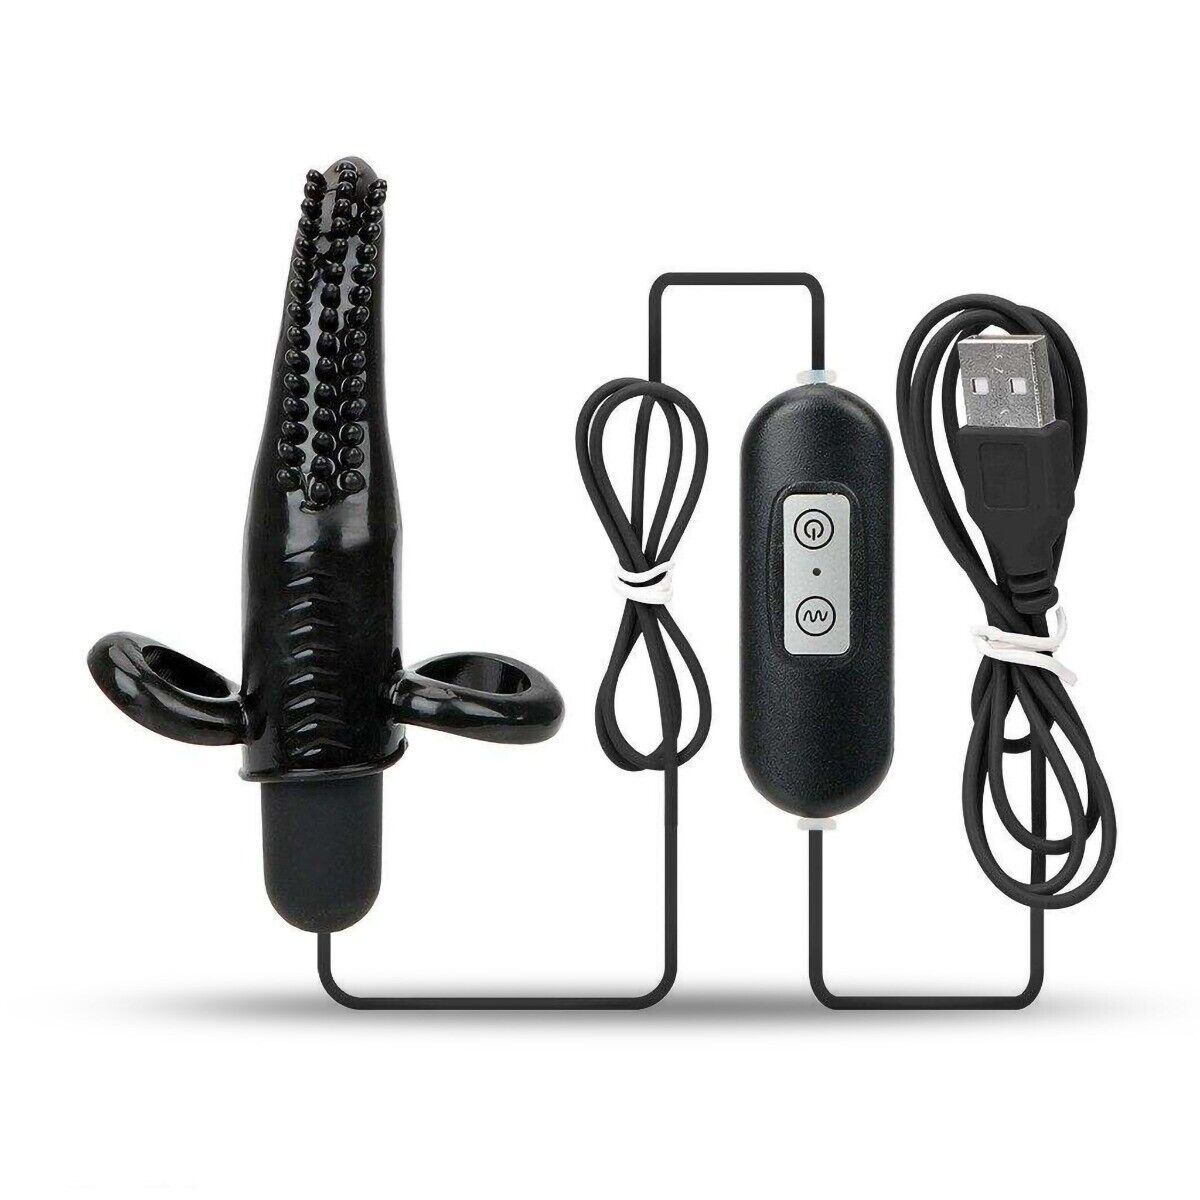 Plug and Play USB Vibrating Tongue Finger Vibrator Bullet Sex-toys for Women